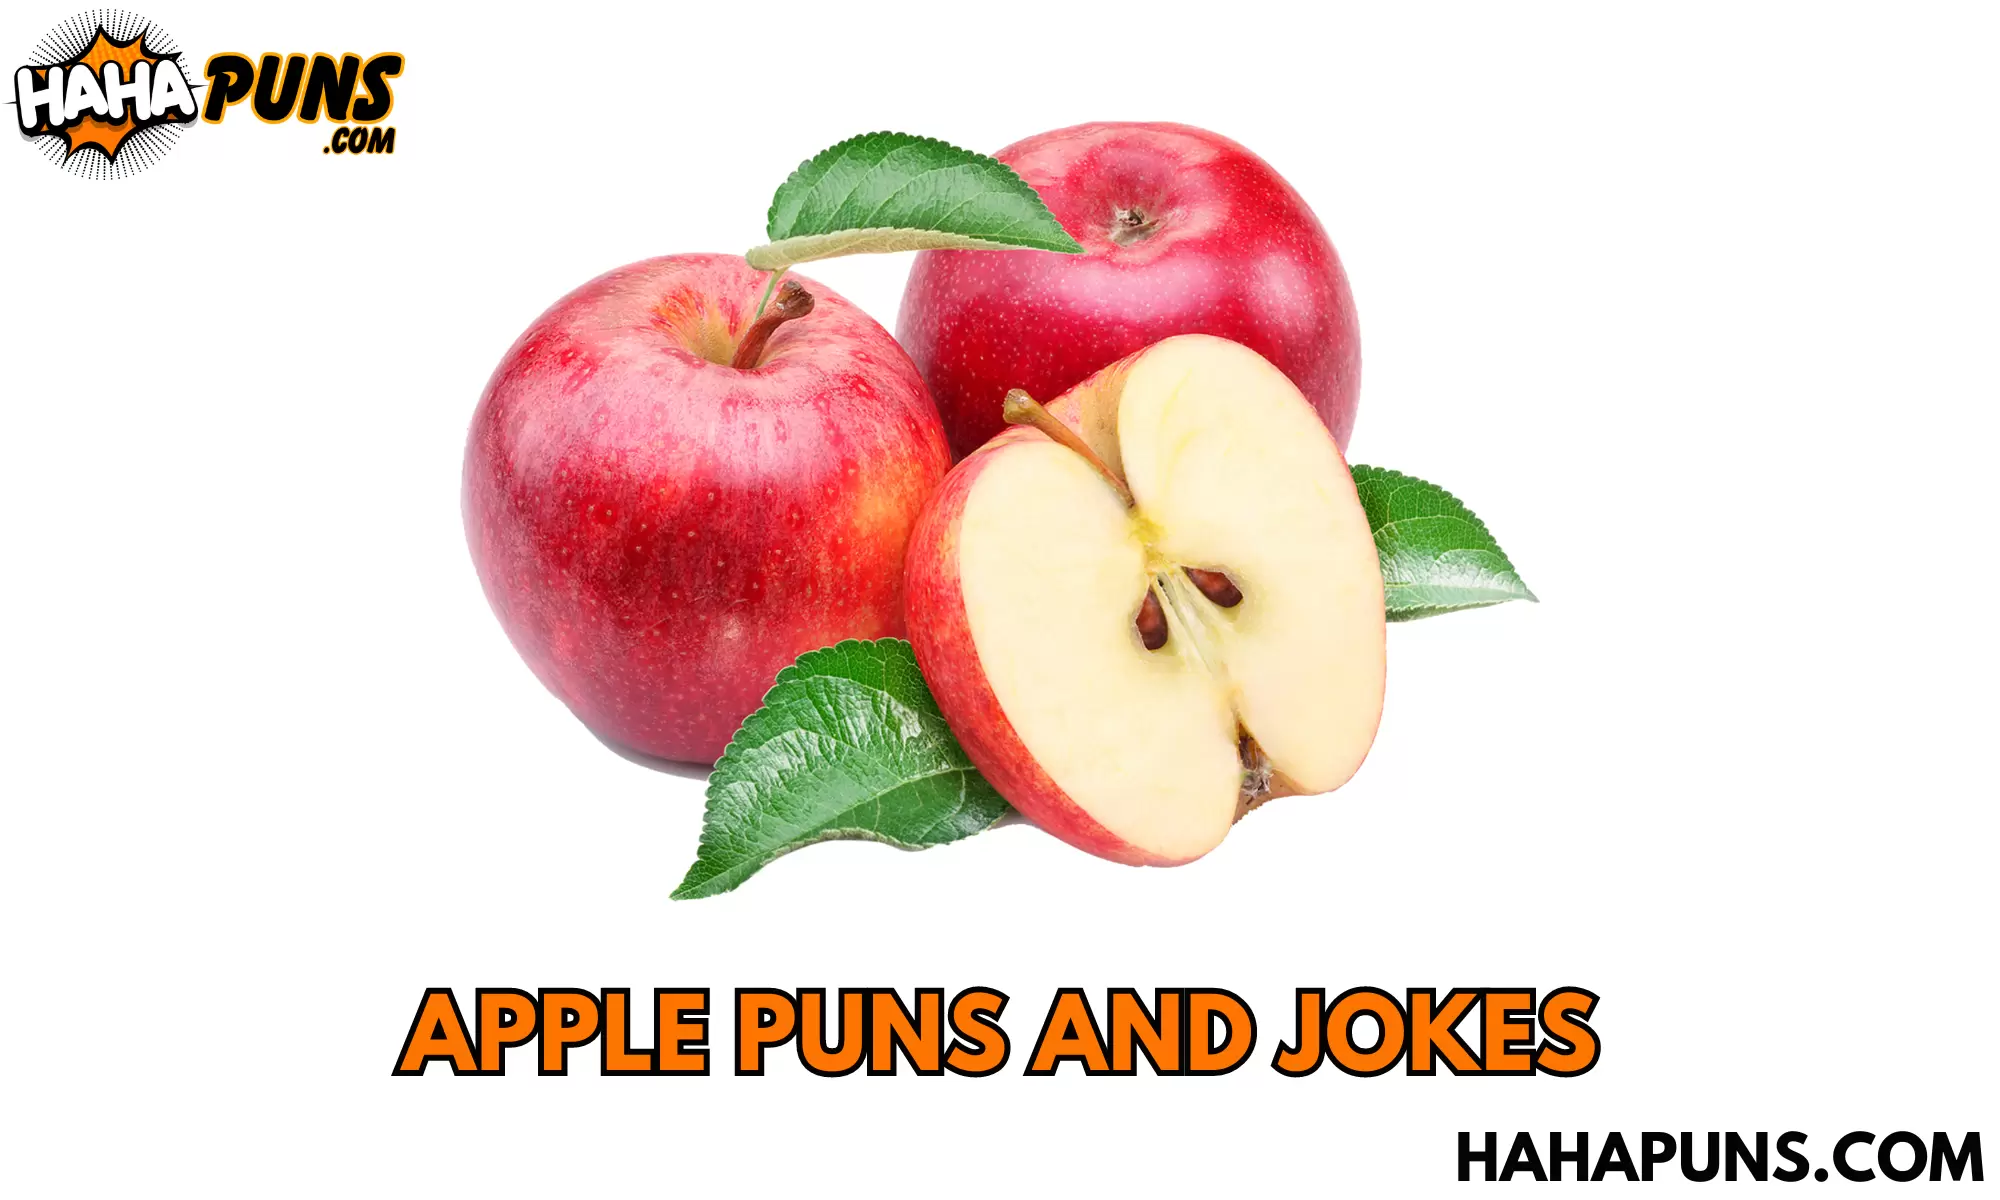 Apple Puns and Jokes